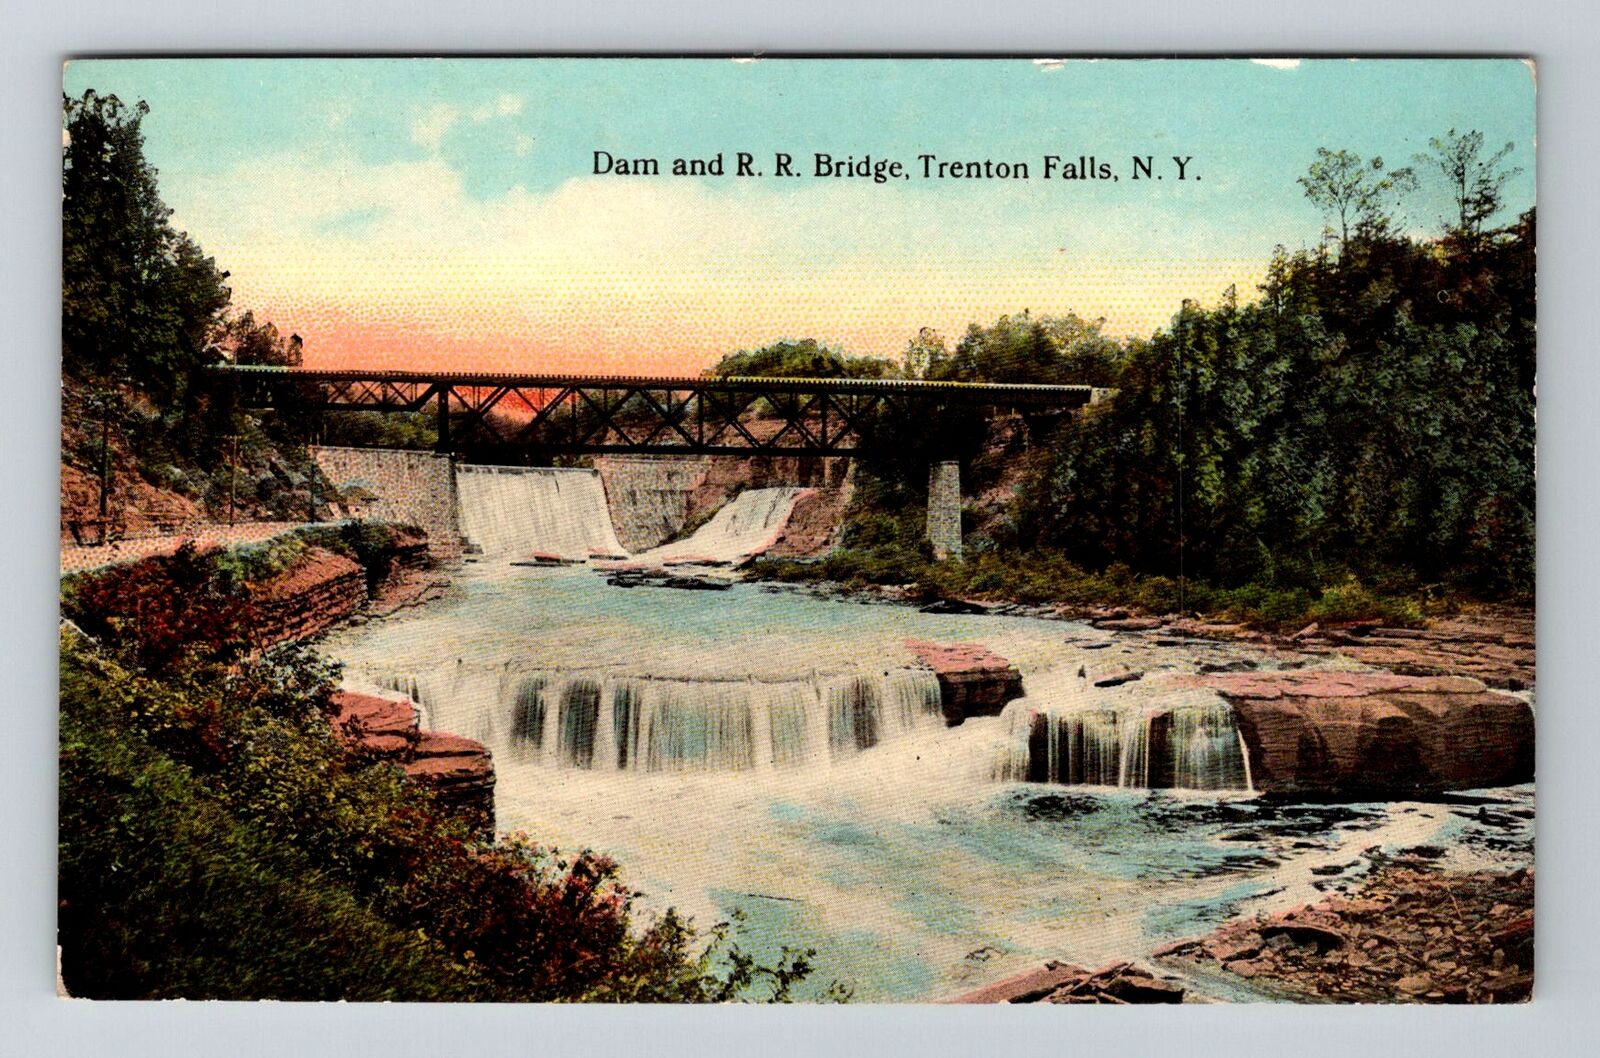 Trenton Falls NY-New York, Dam and R.R. Bridge Vintage Souvenir Postcard